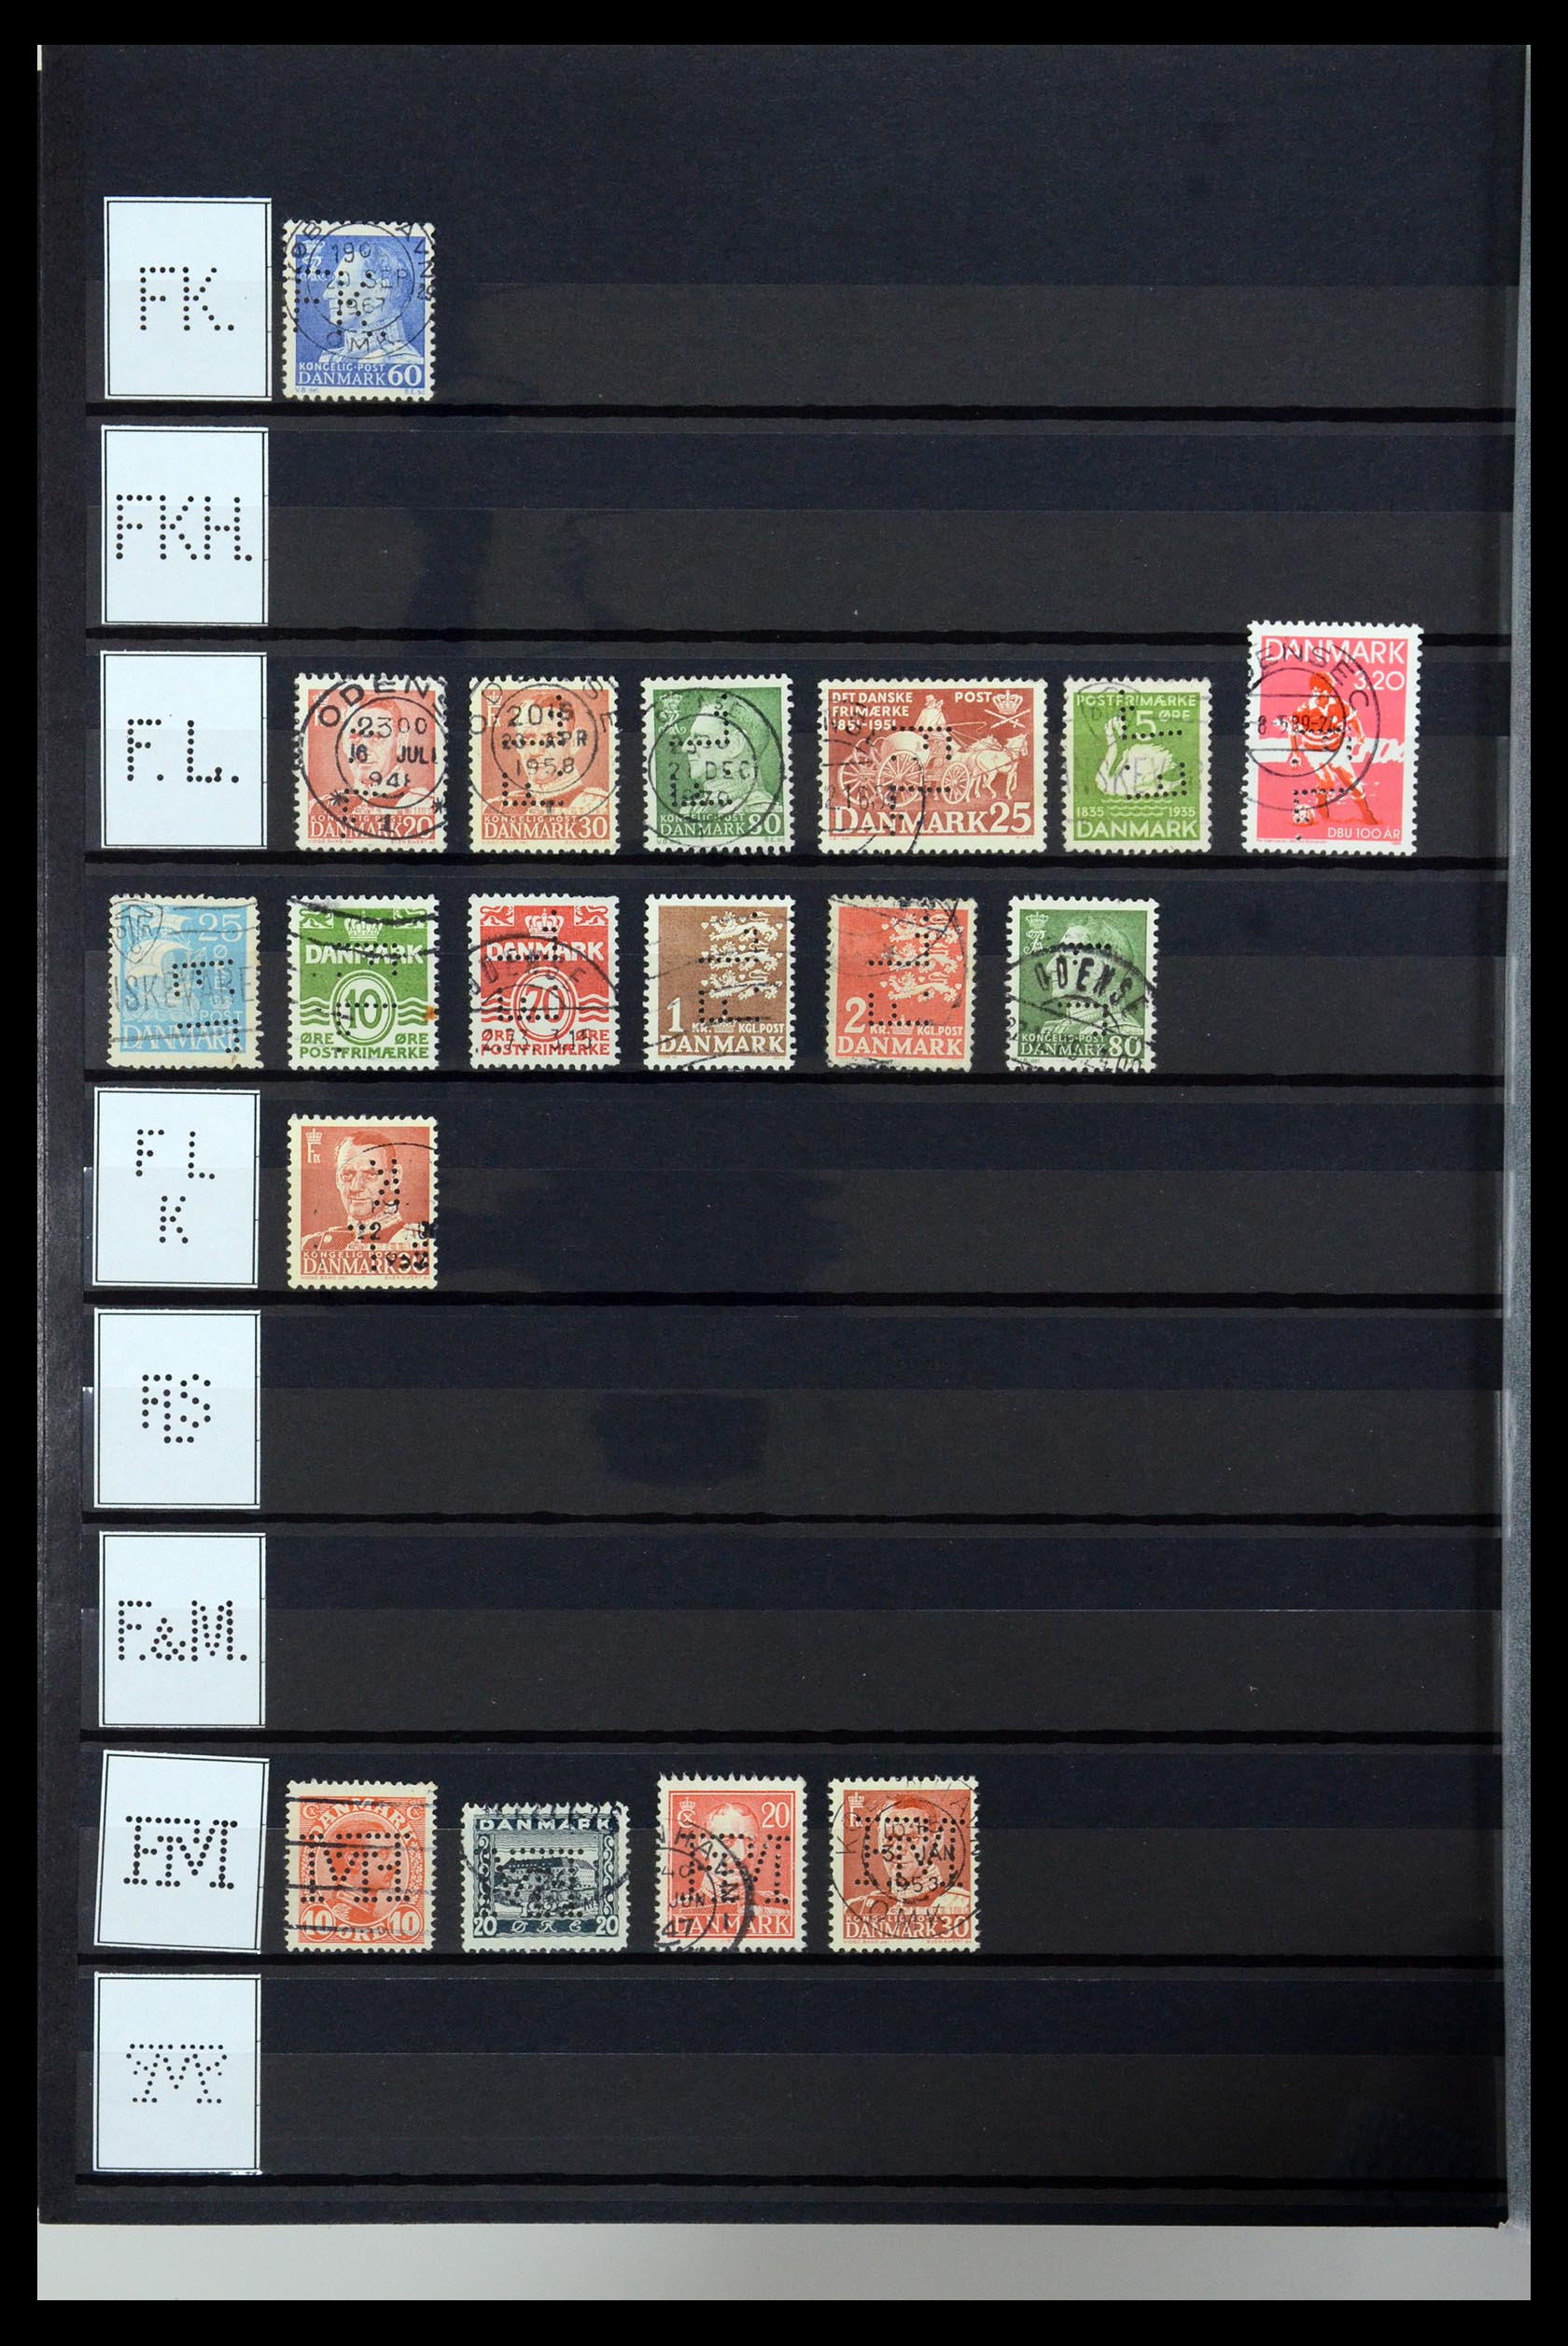 36396 053 - Stamp collection 36396 Denmark perfins.